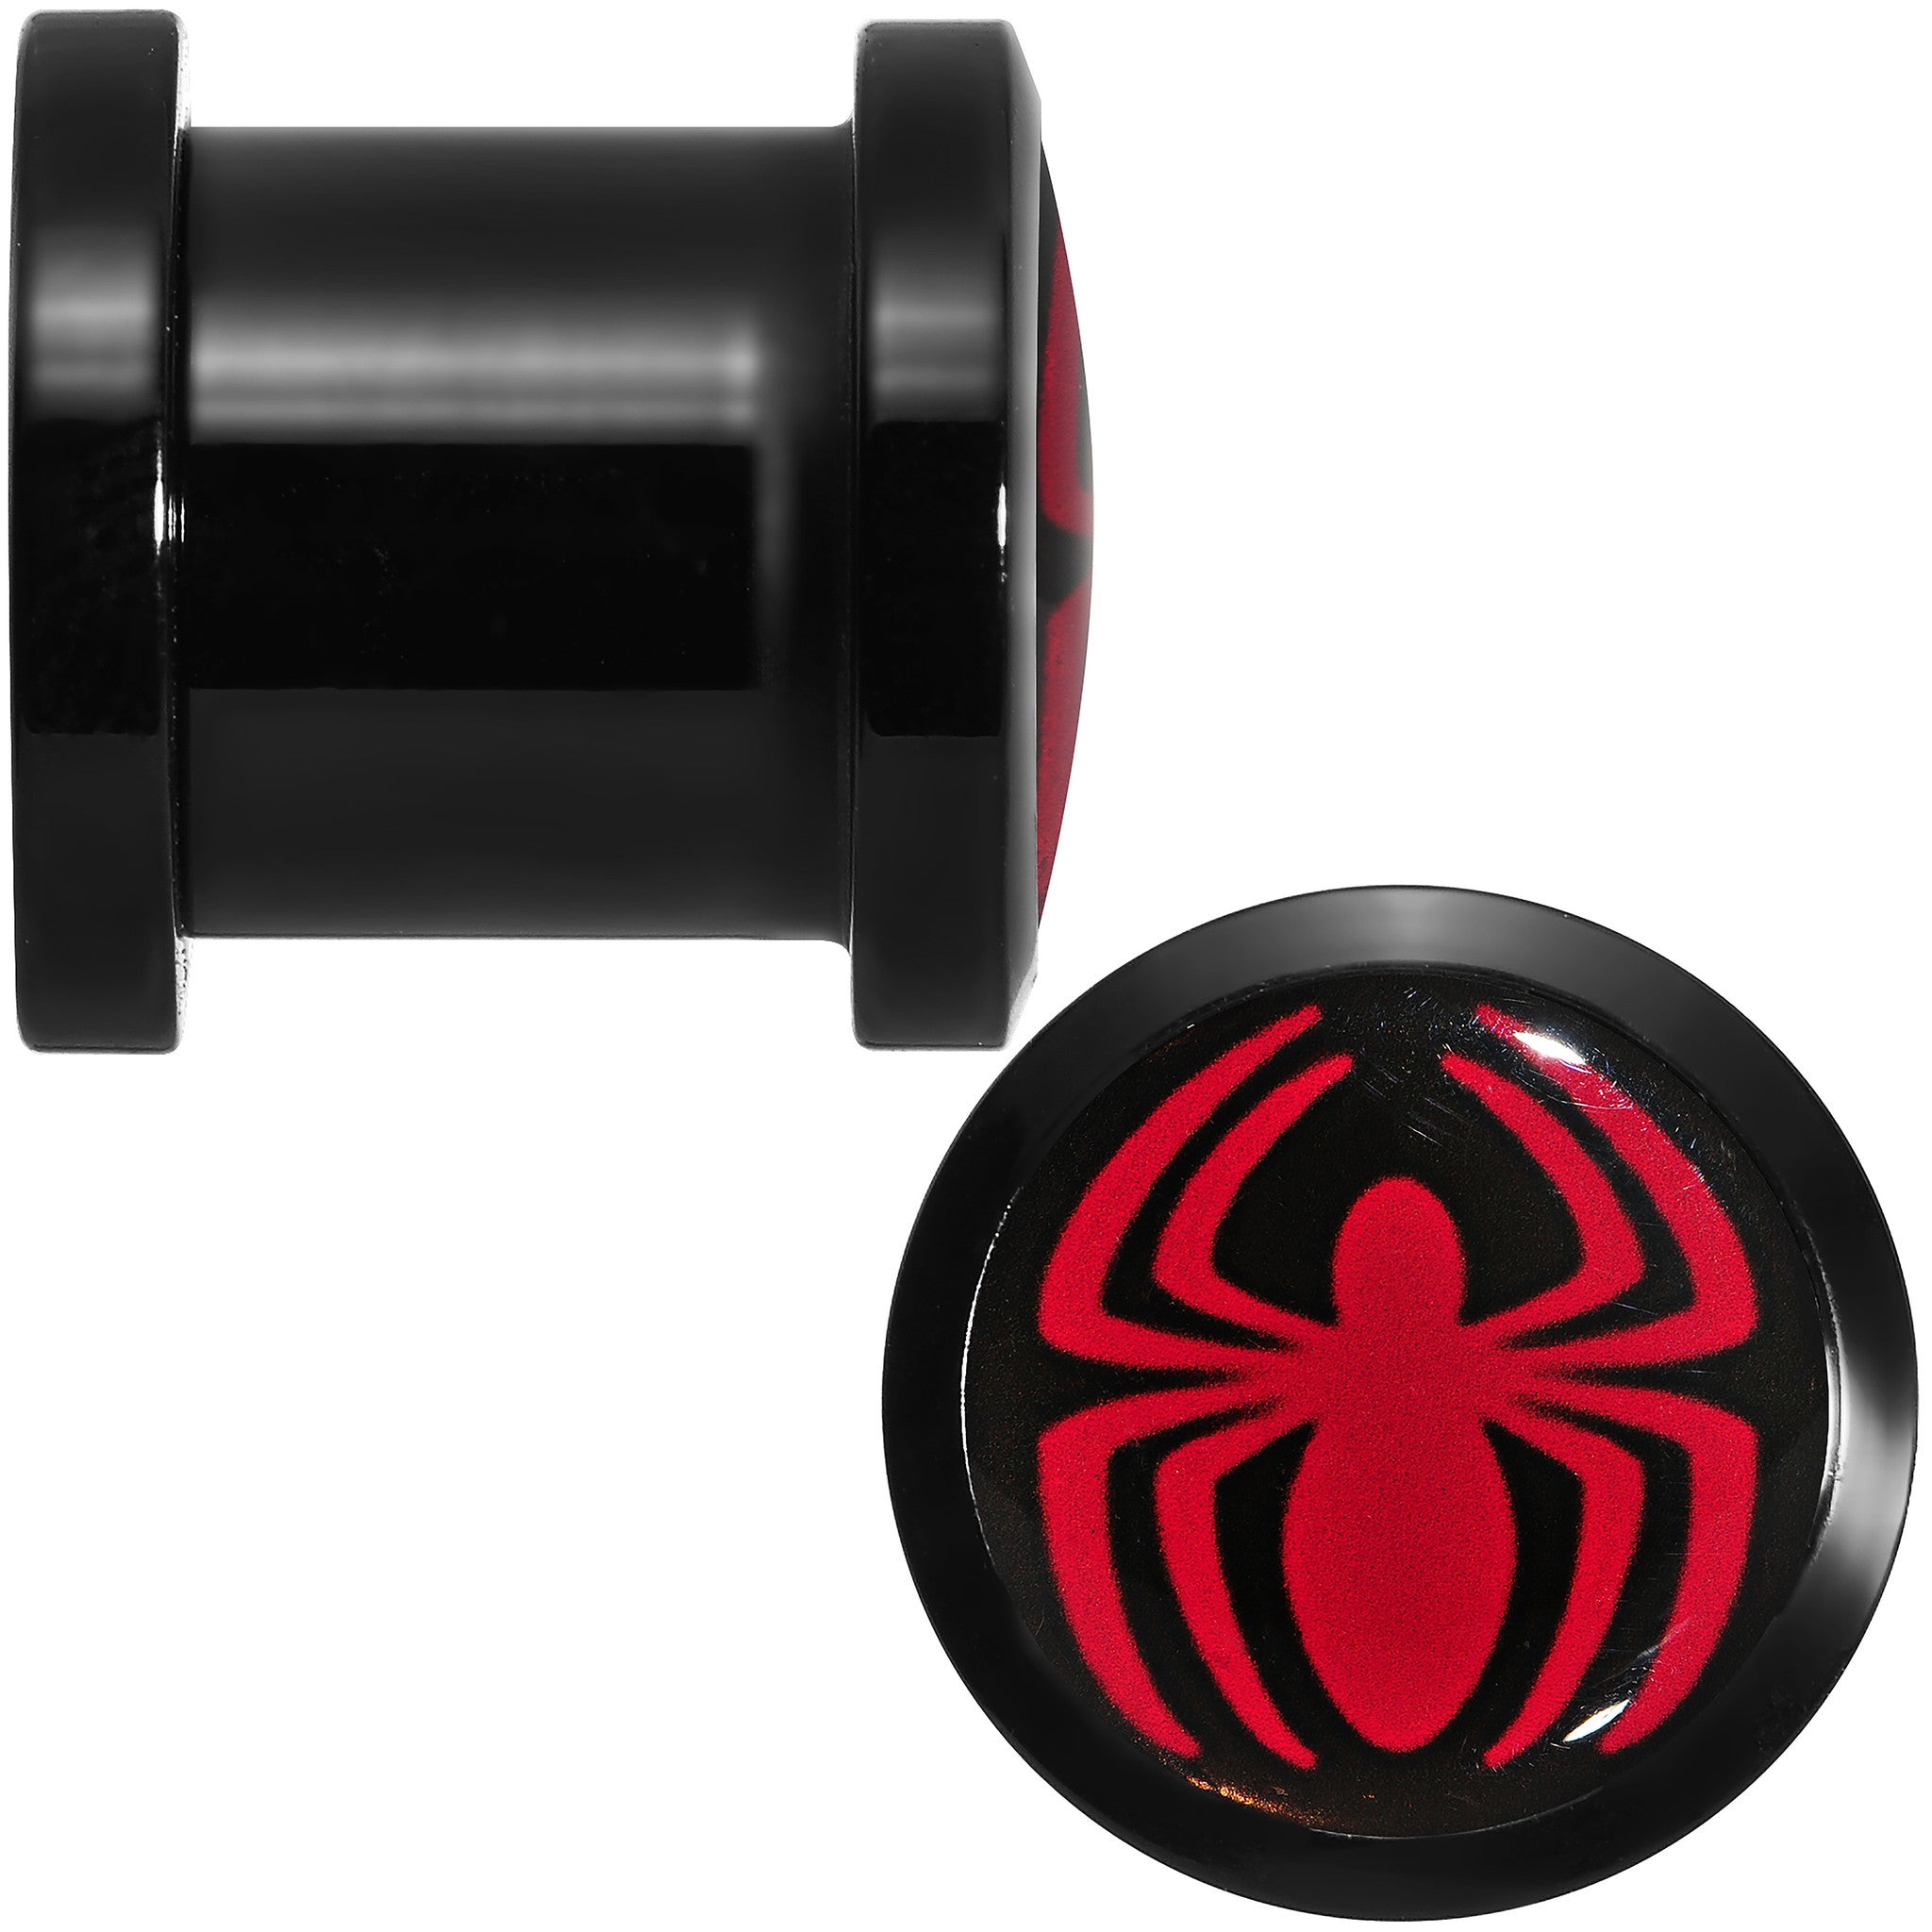 00 Gauge Licensed Red Spider-Man Logo Acrylic Screw Fit Plugs Set